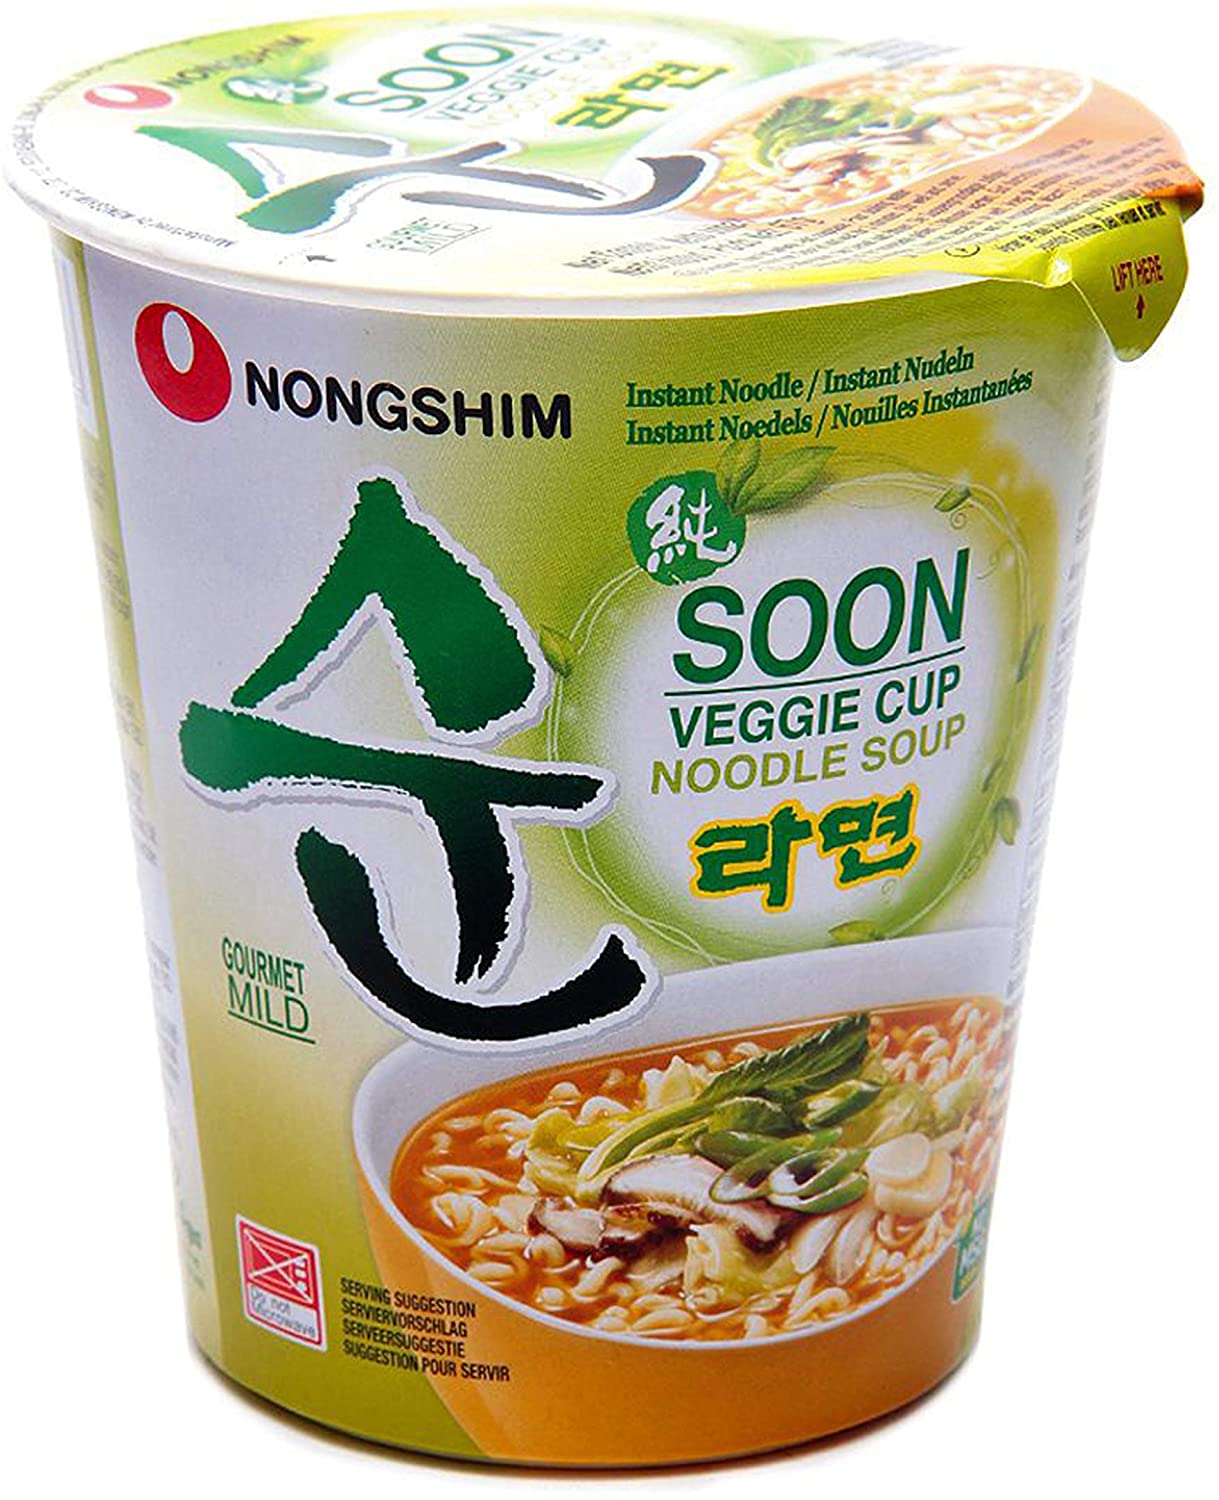 Veggie Soon Instant Noodle Cup 67g by Nongshim